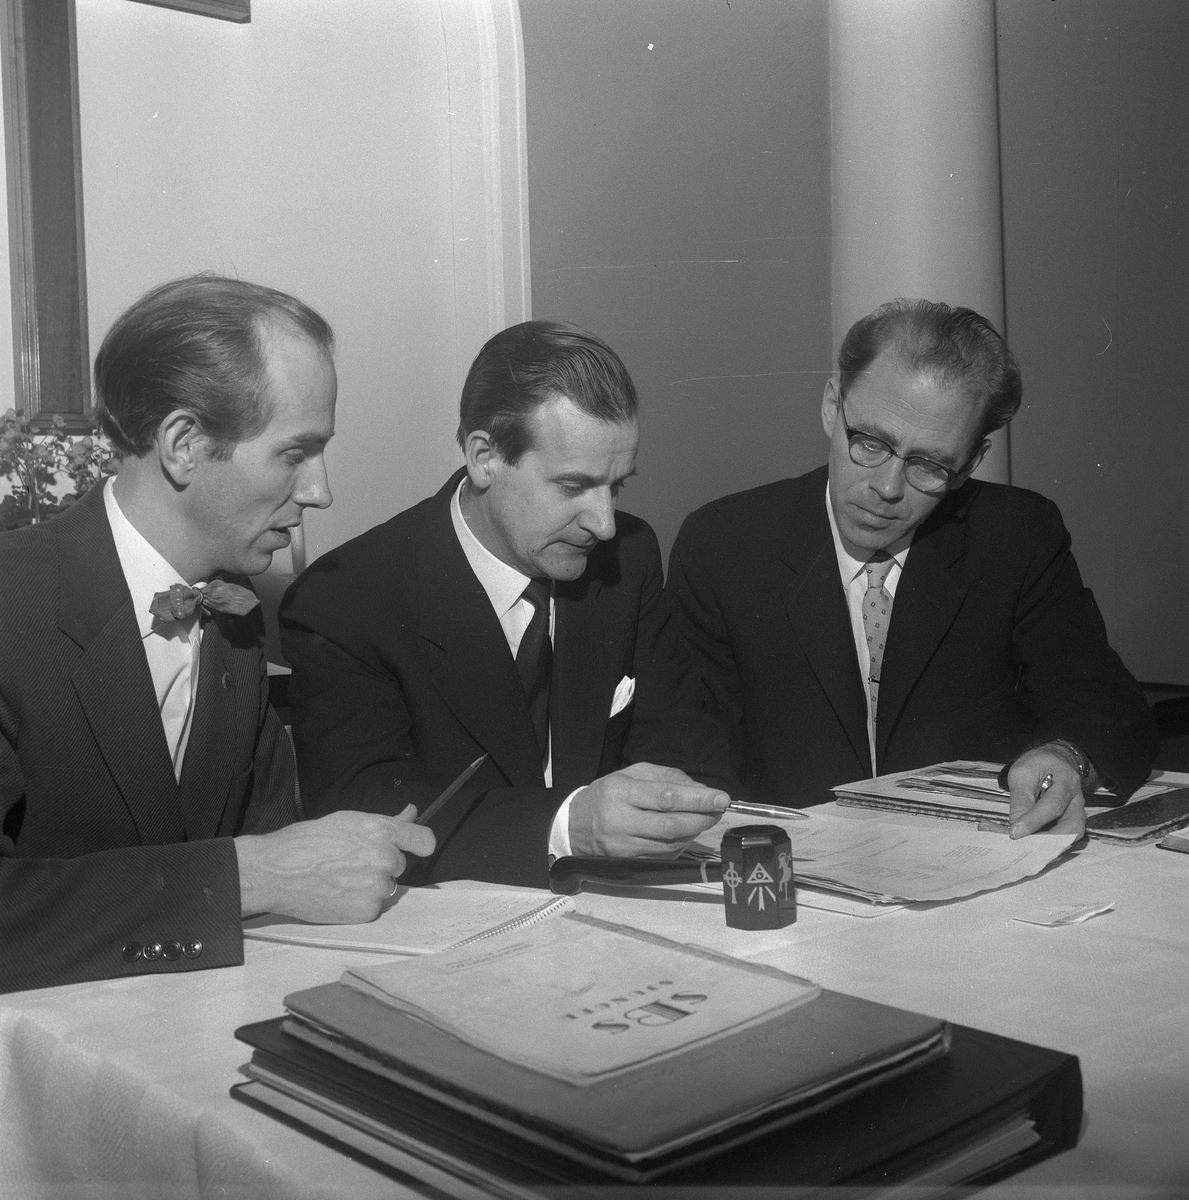 NTO-konferens.
7 januari 1959.